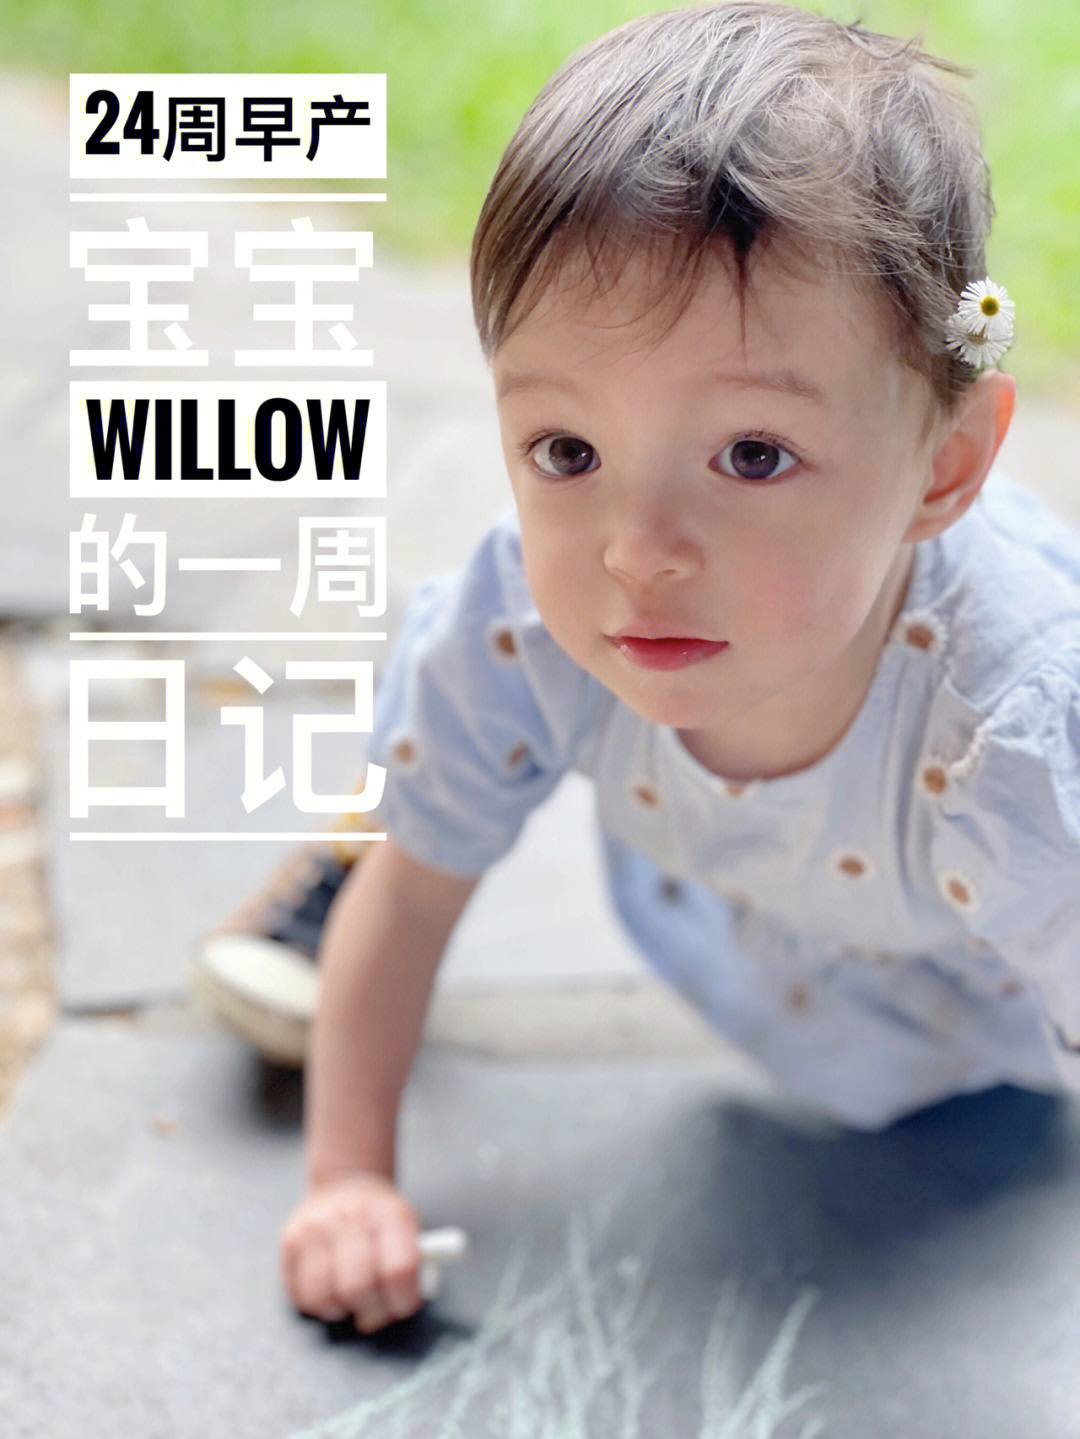 willow简谱图片